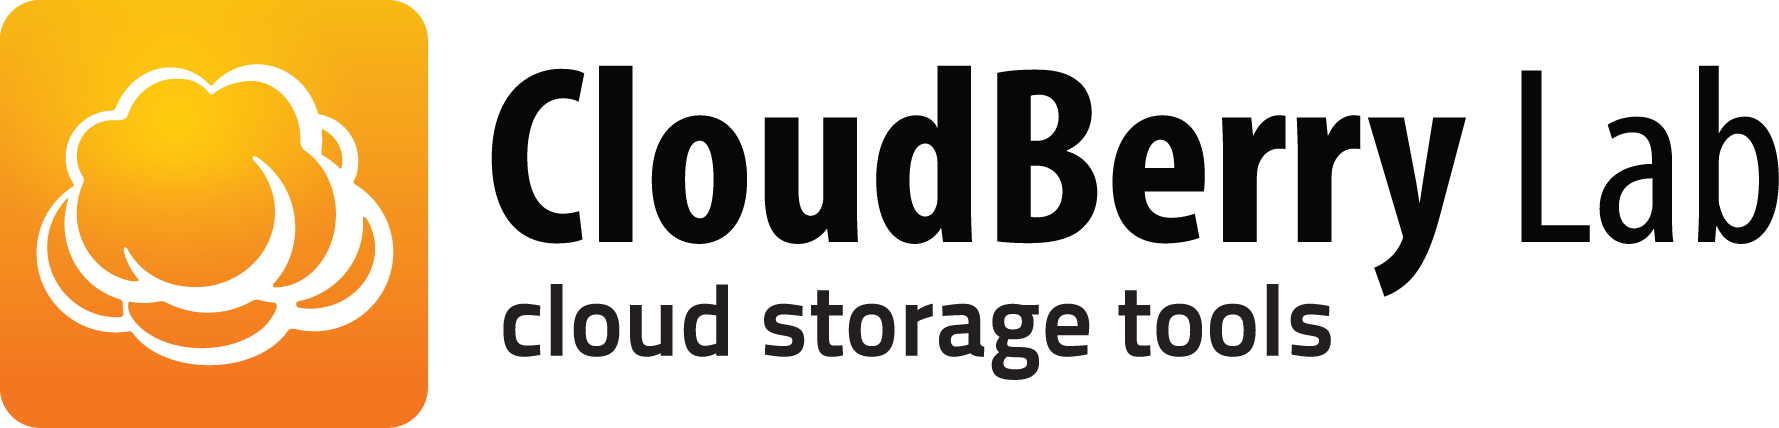 cloudberry_logo